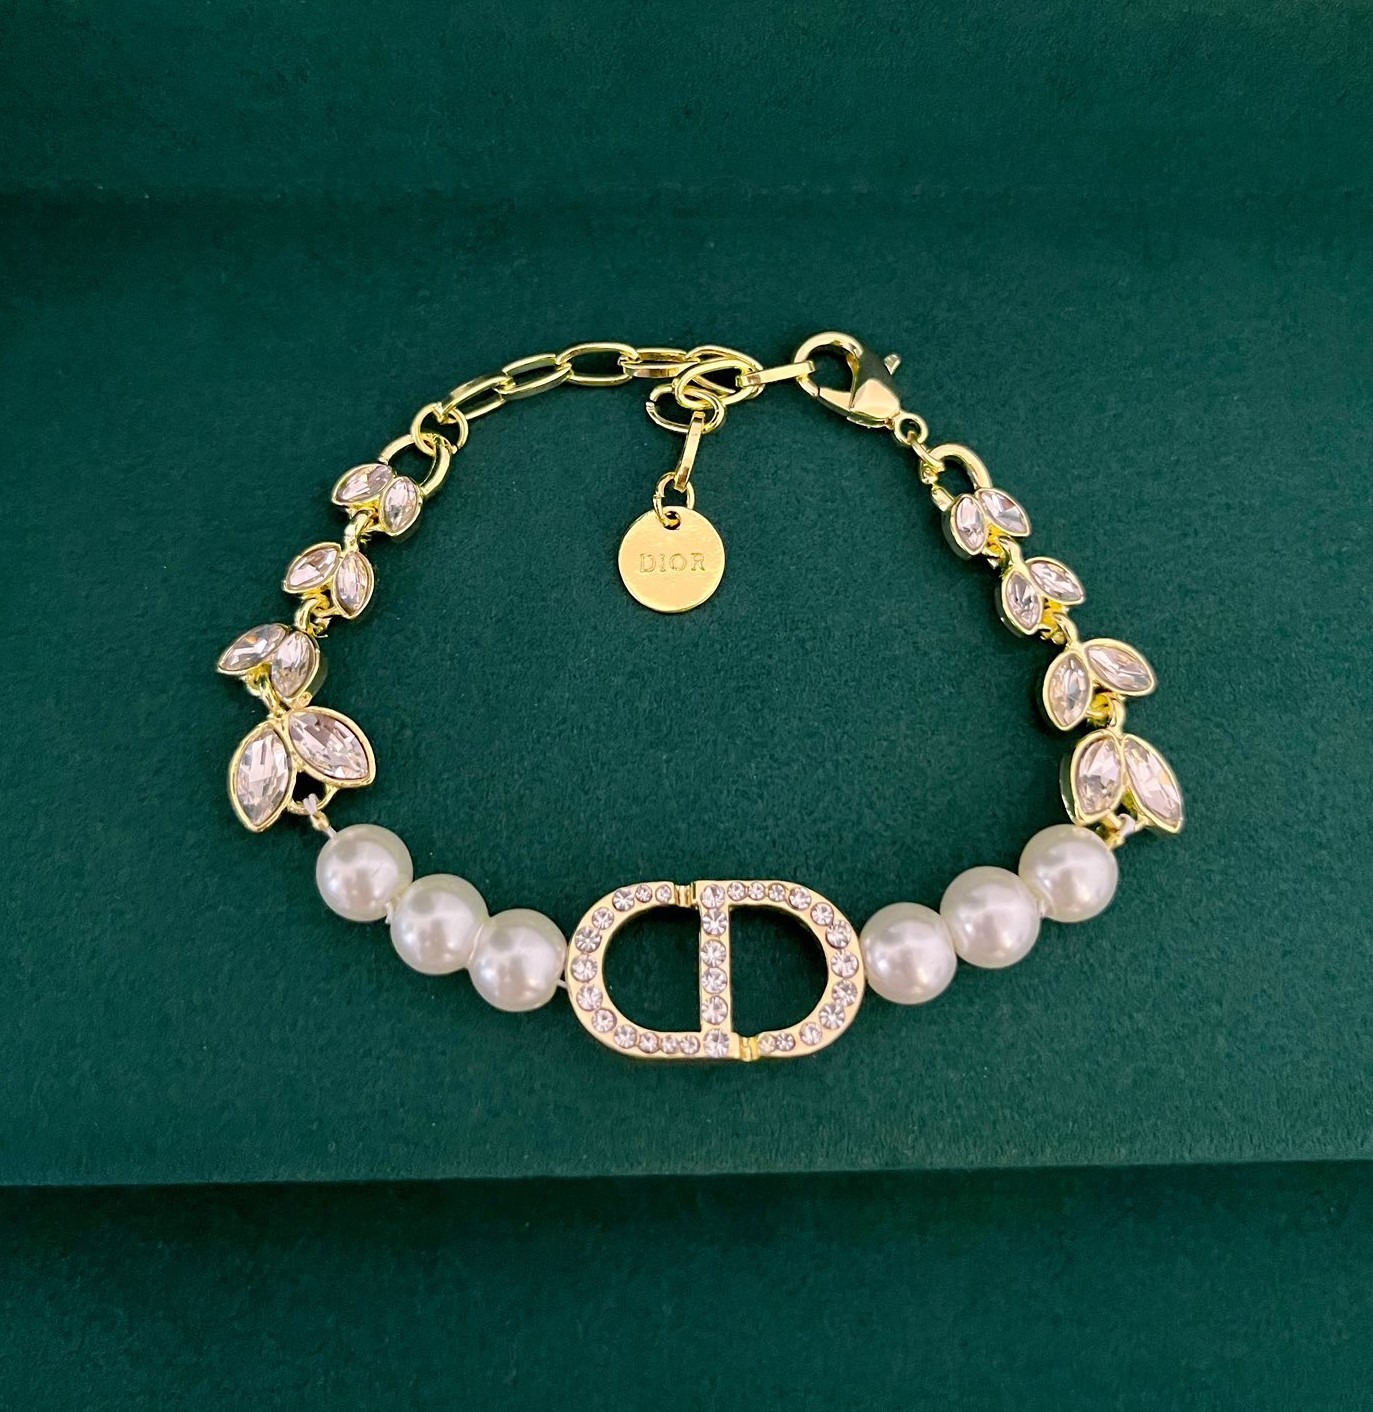 x1 Dior bracelet